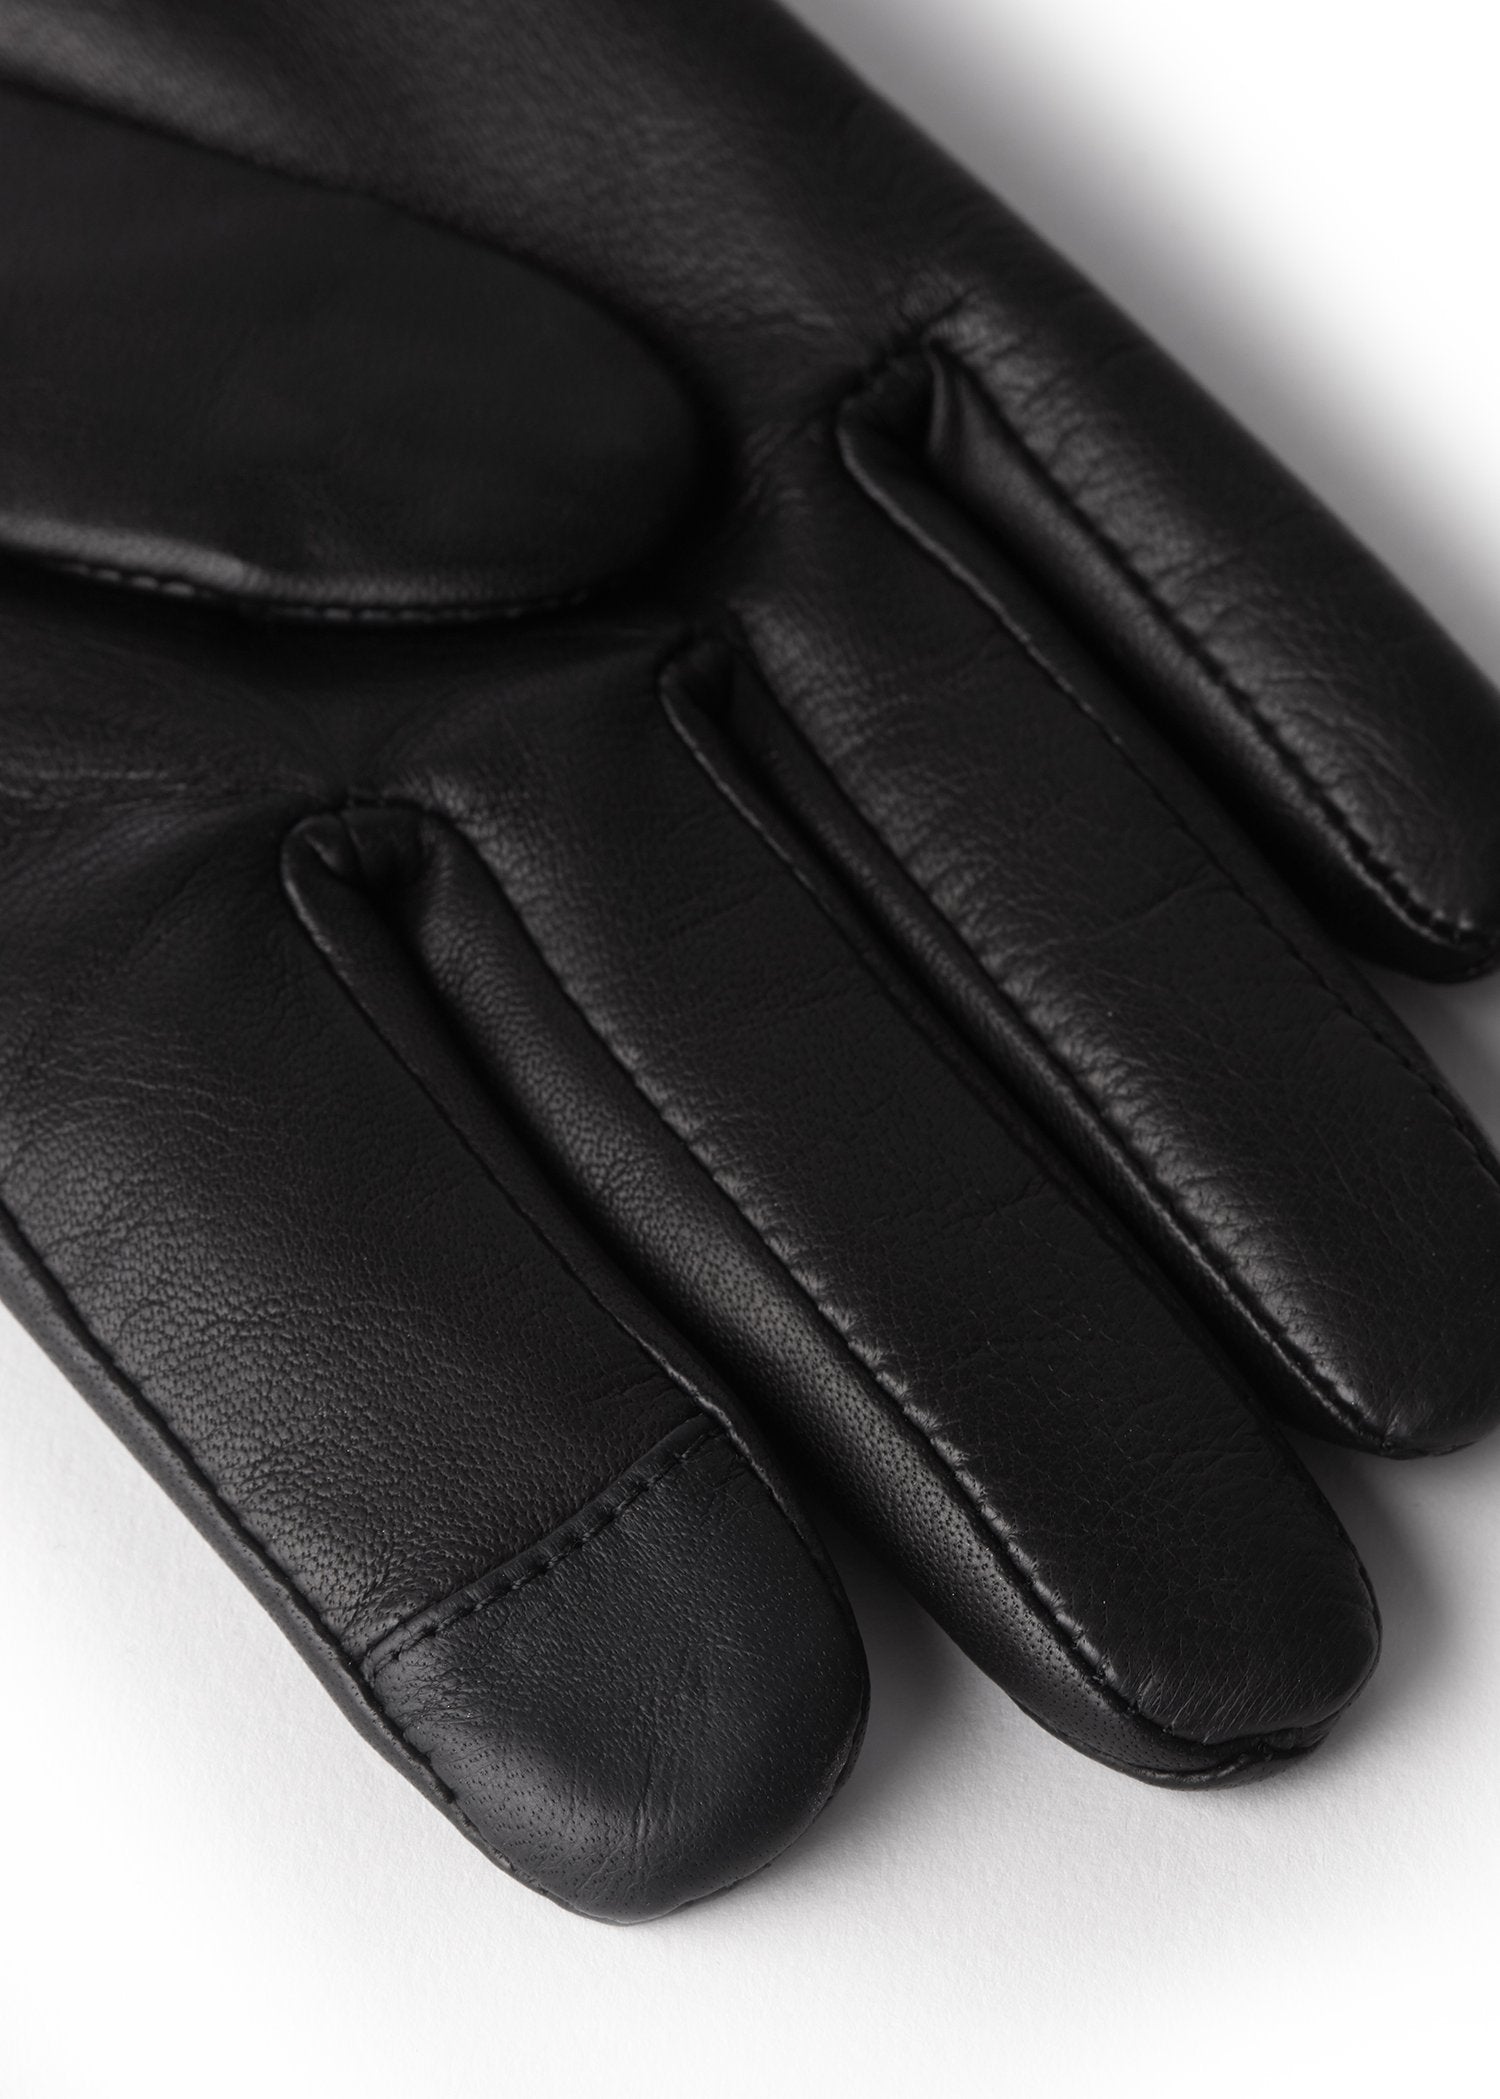 Monogram Leather Gloves - Black